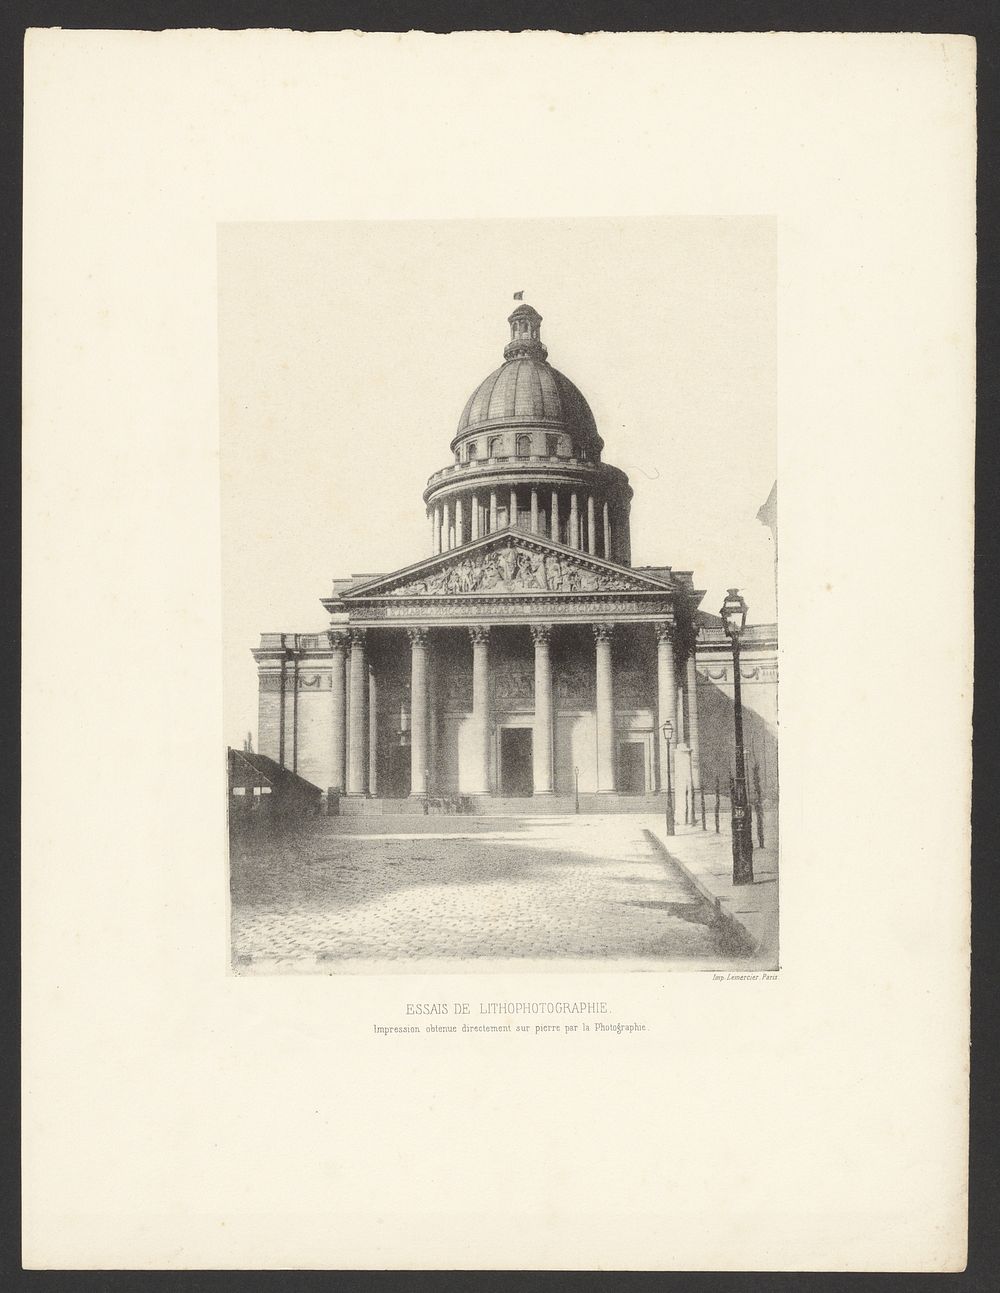 Pantheon by Lemercier Lerebours and Bareswill